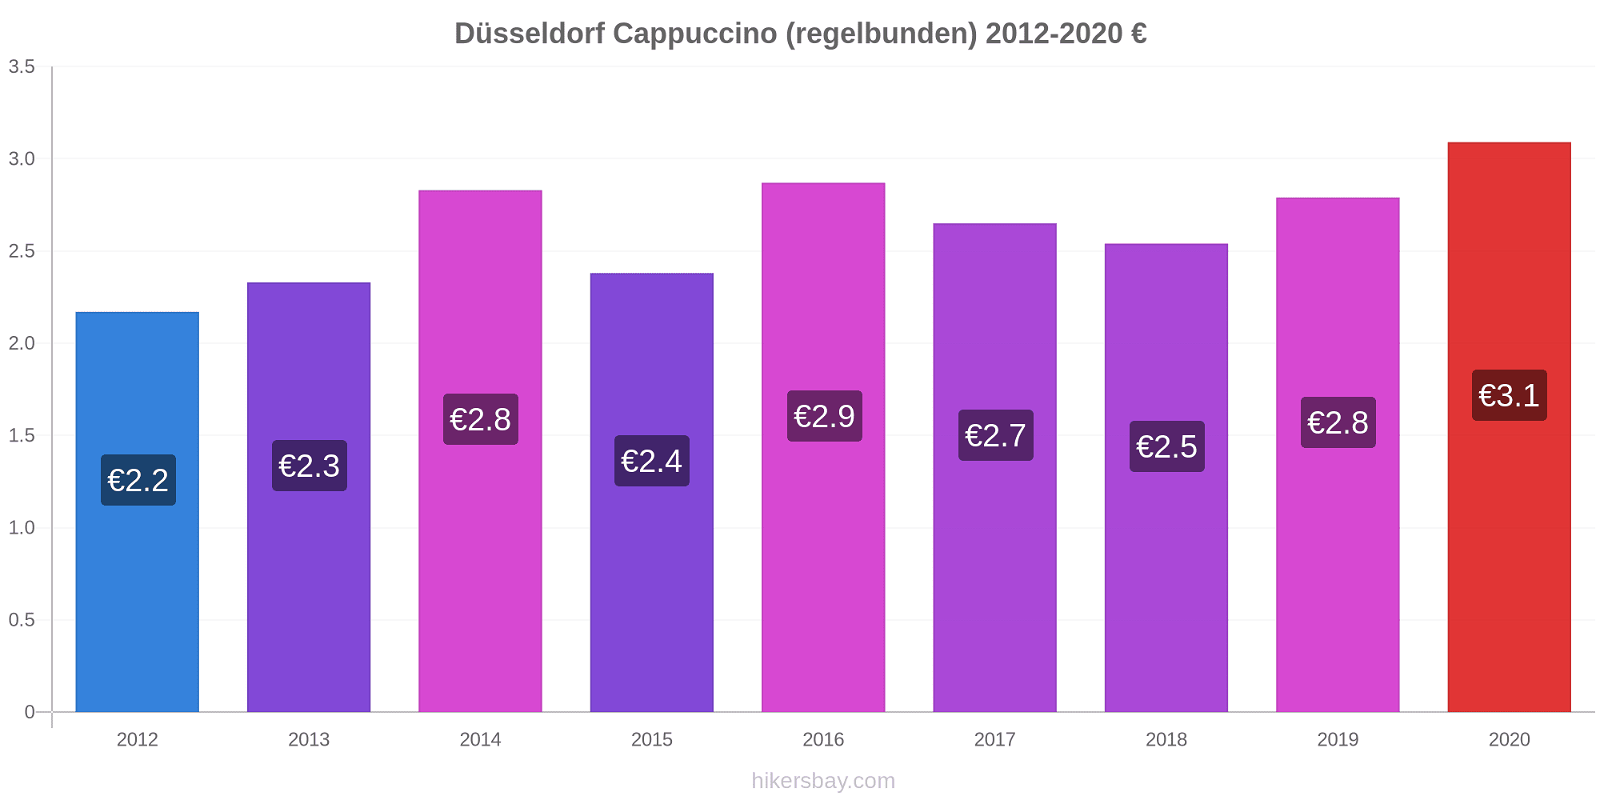 Düsseldorf prisförändringar Cappuccino (regelbunden) hikersbay.com